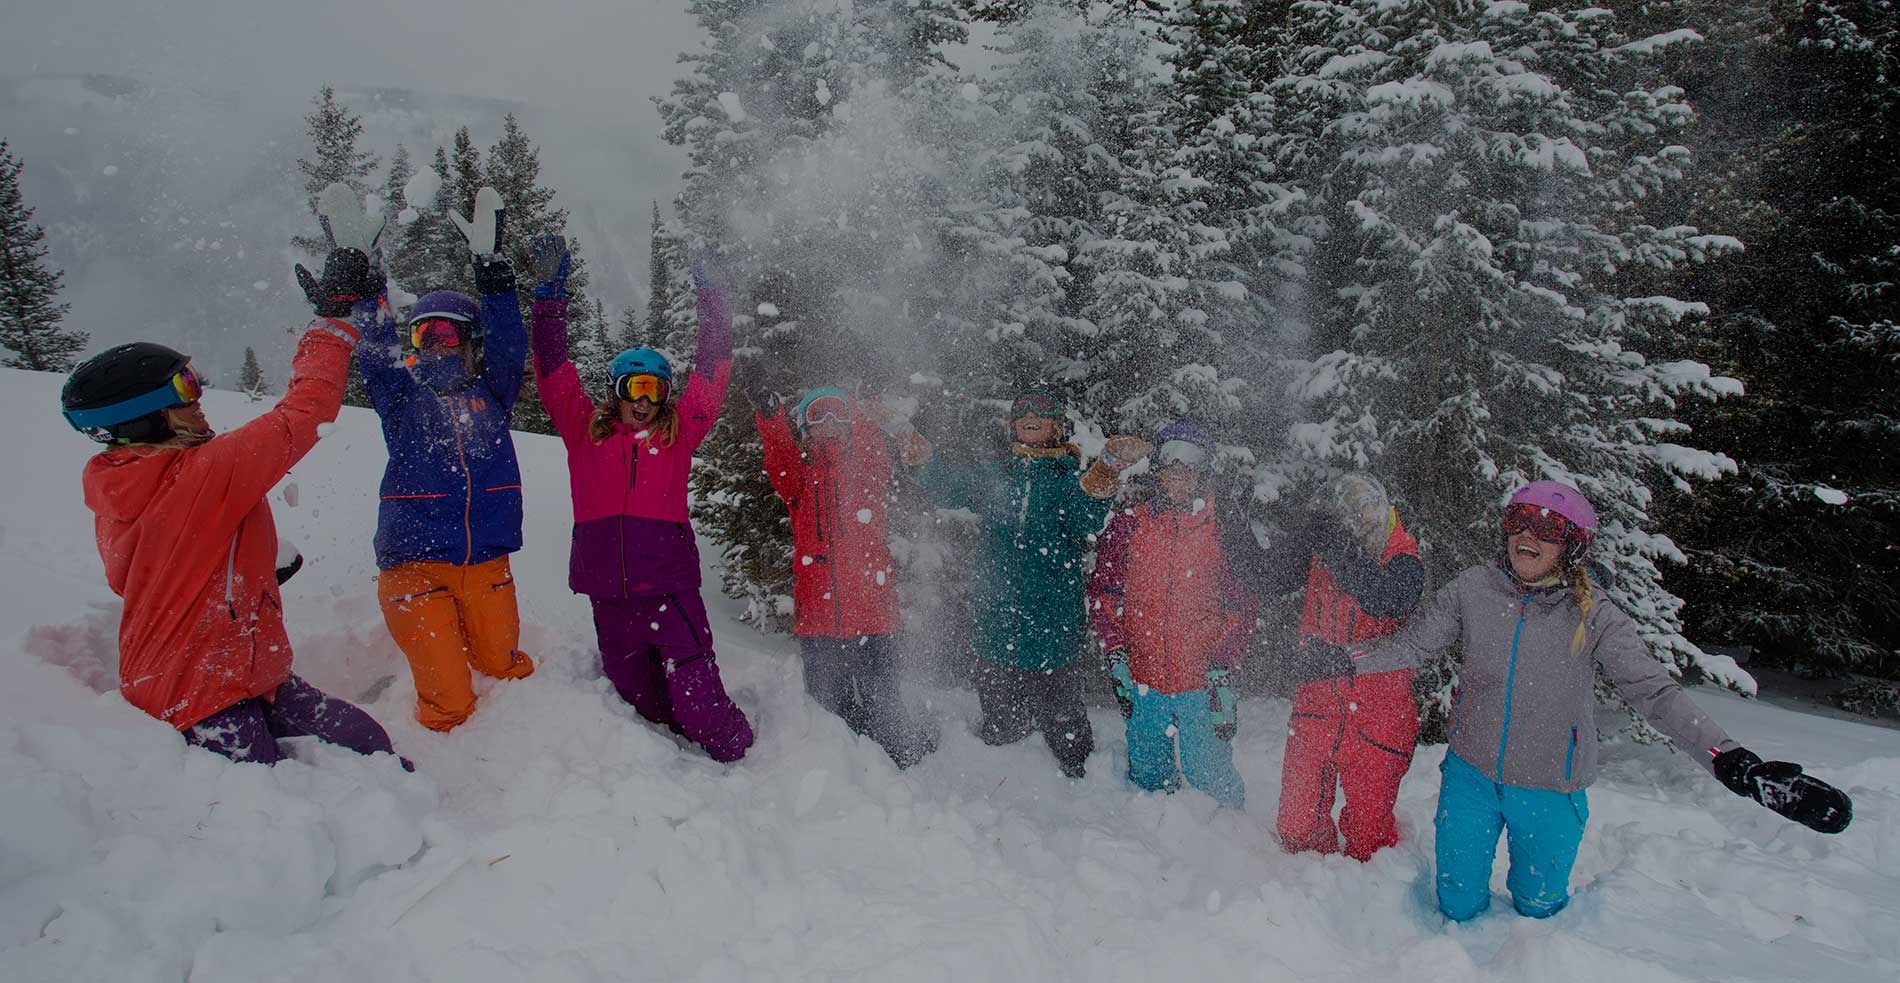 Celebrating Women's Day at Aspen Snowmass